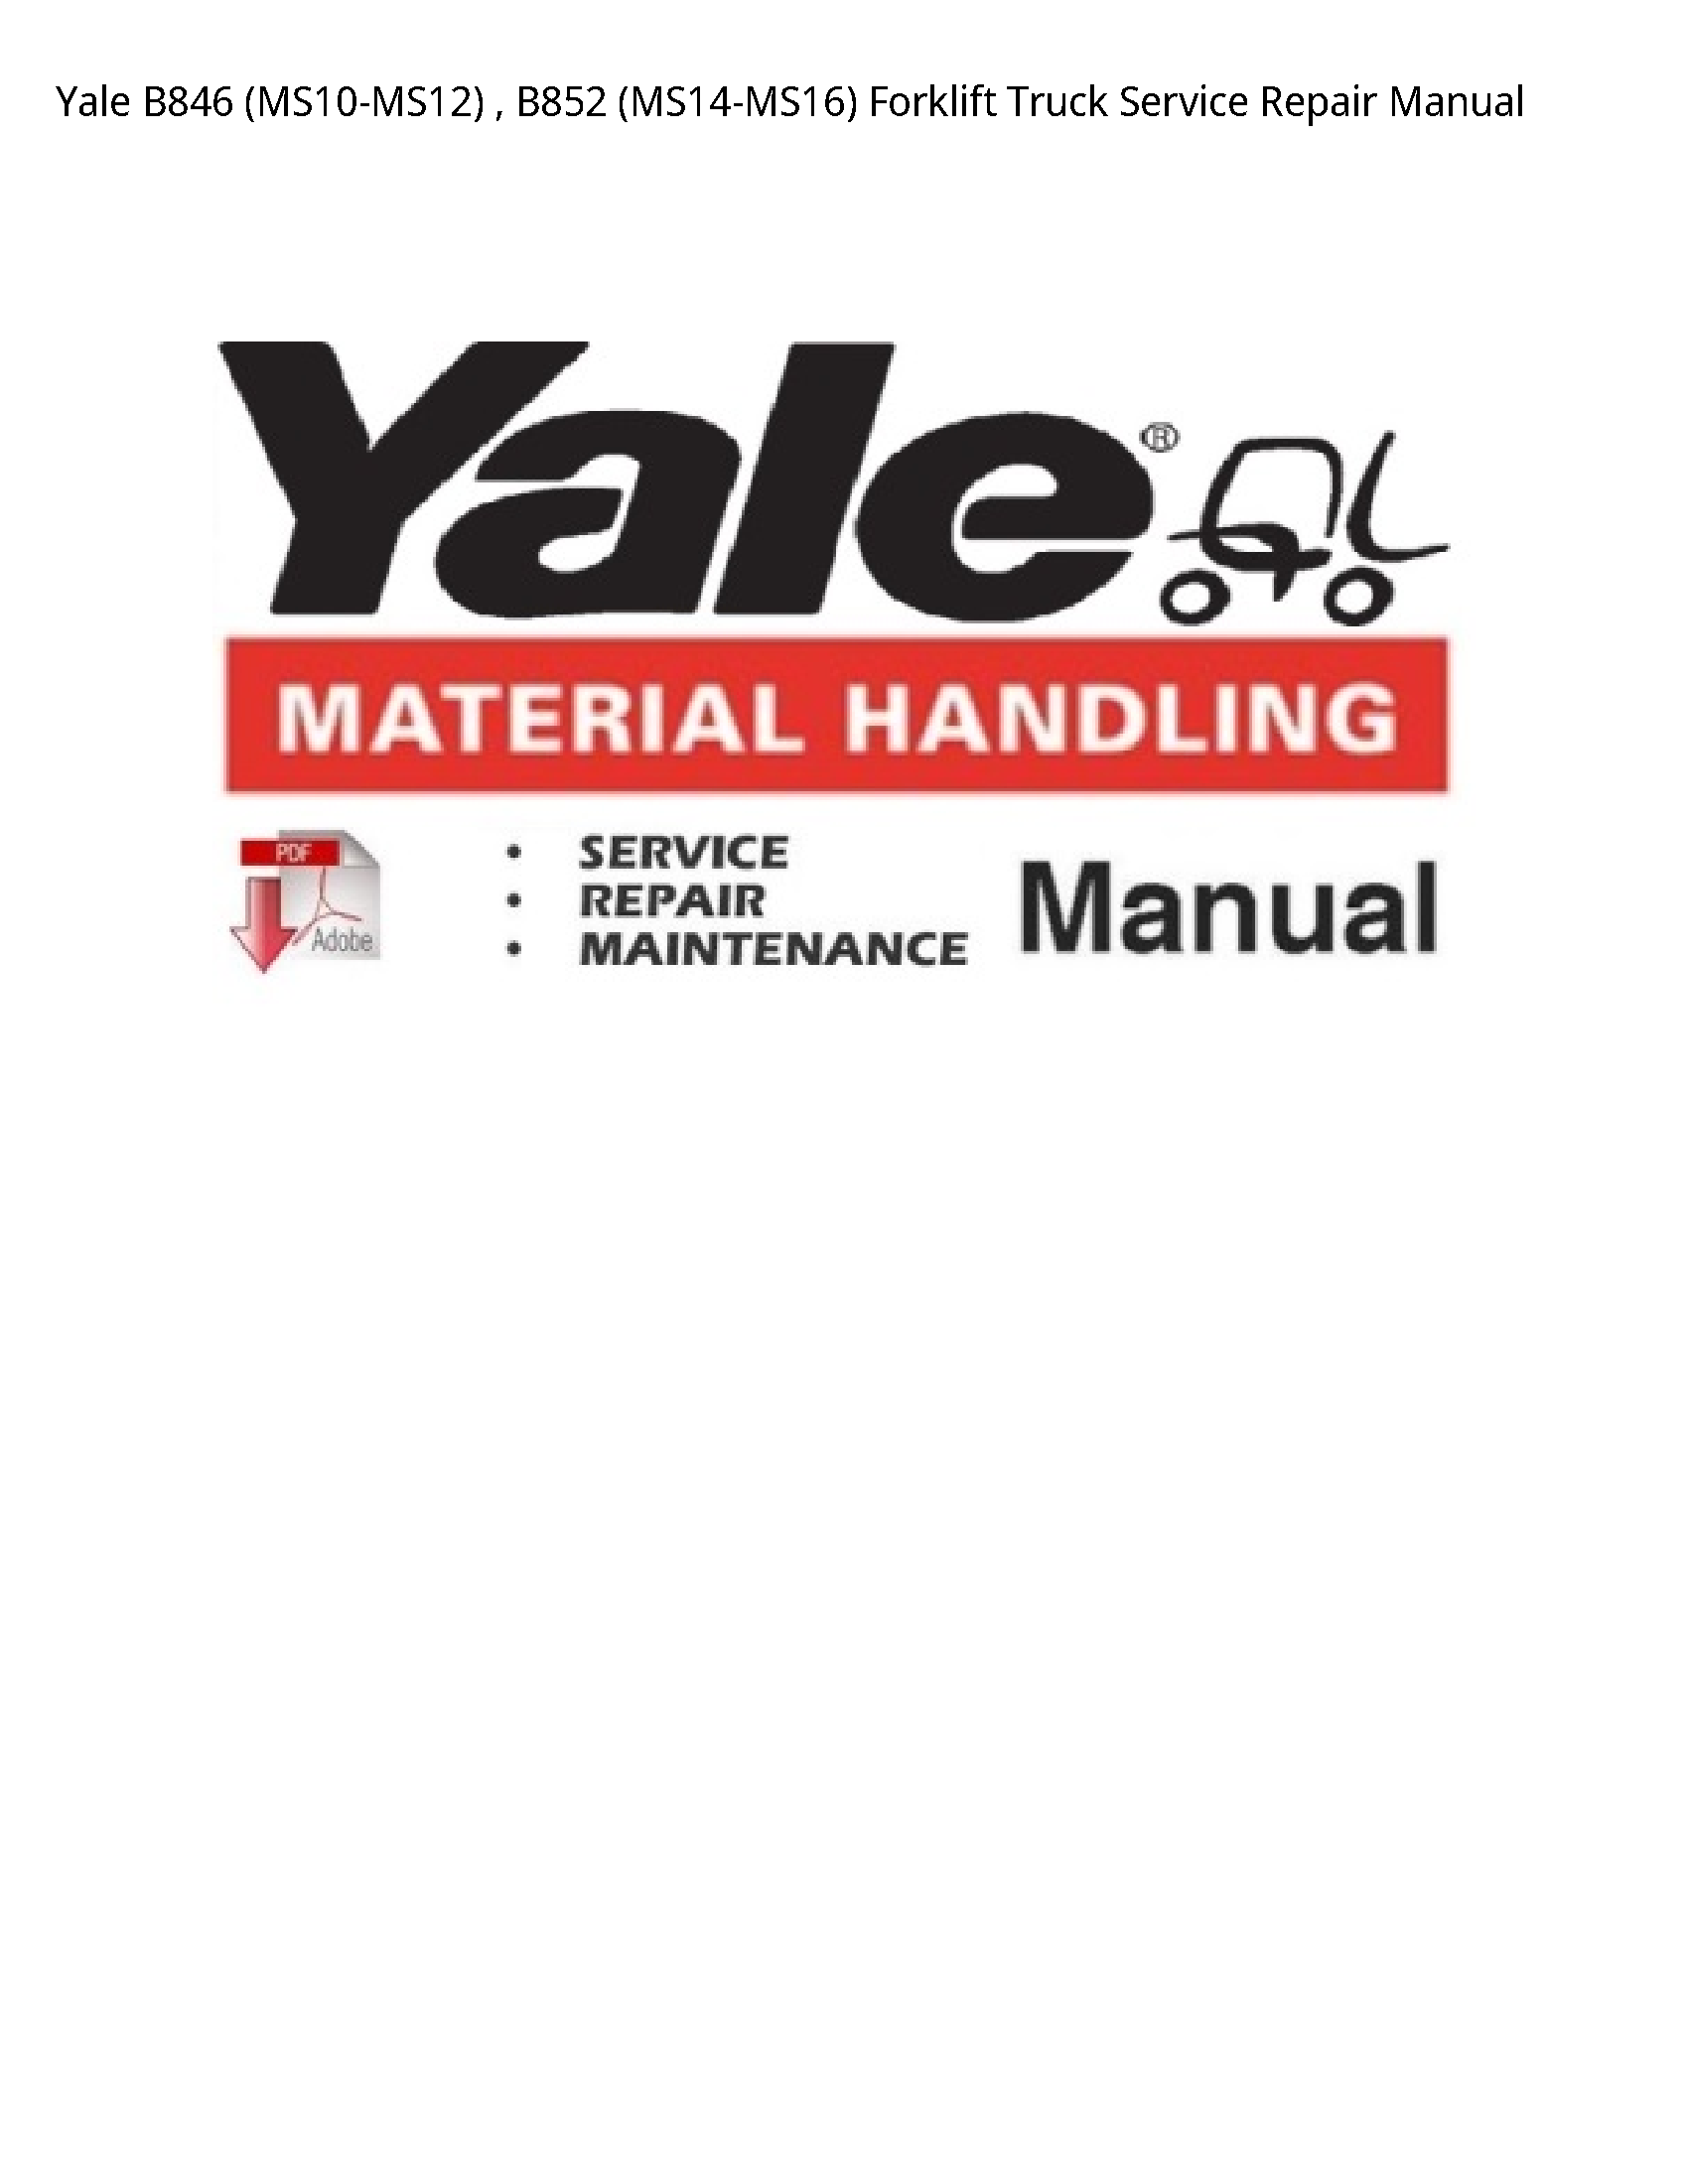 Yale B846 Forklift Truck manual